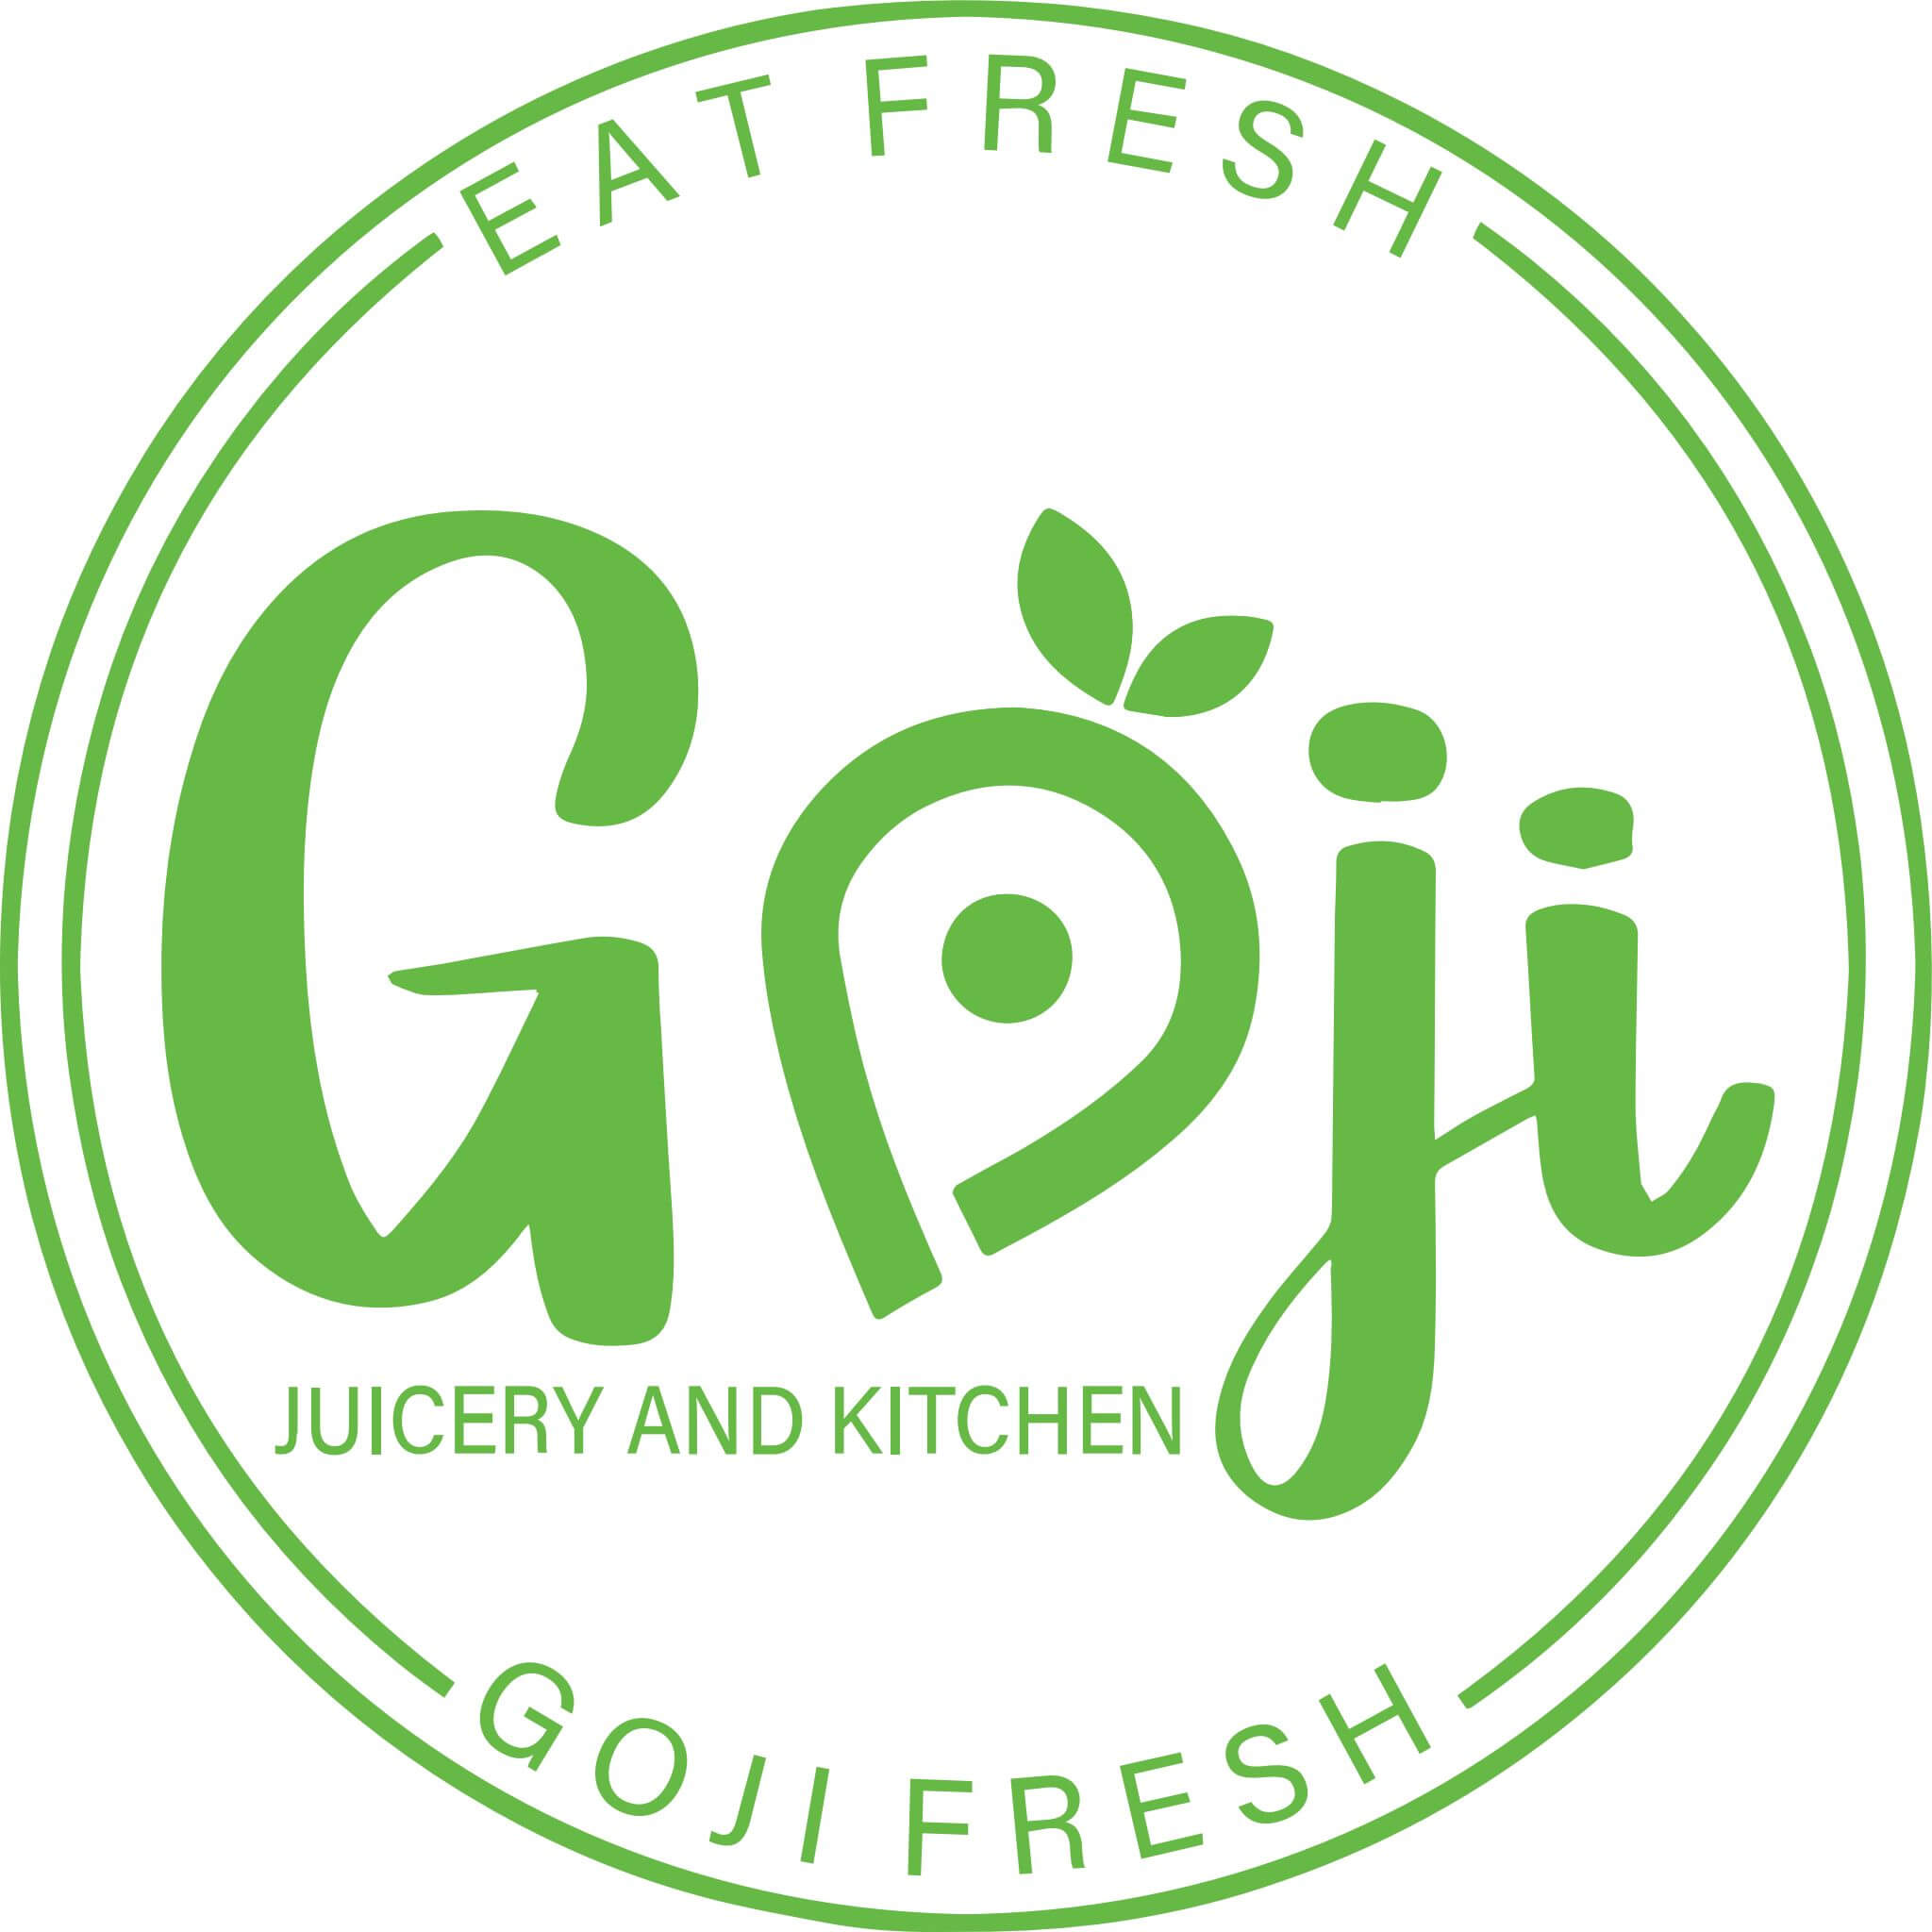 Goji Juicery and Kitchen